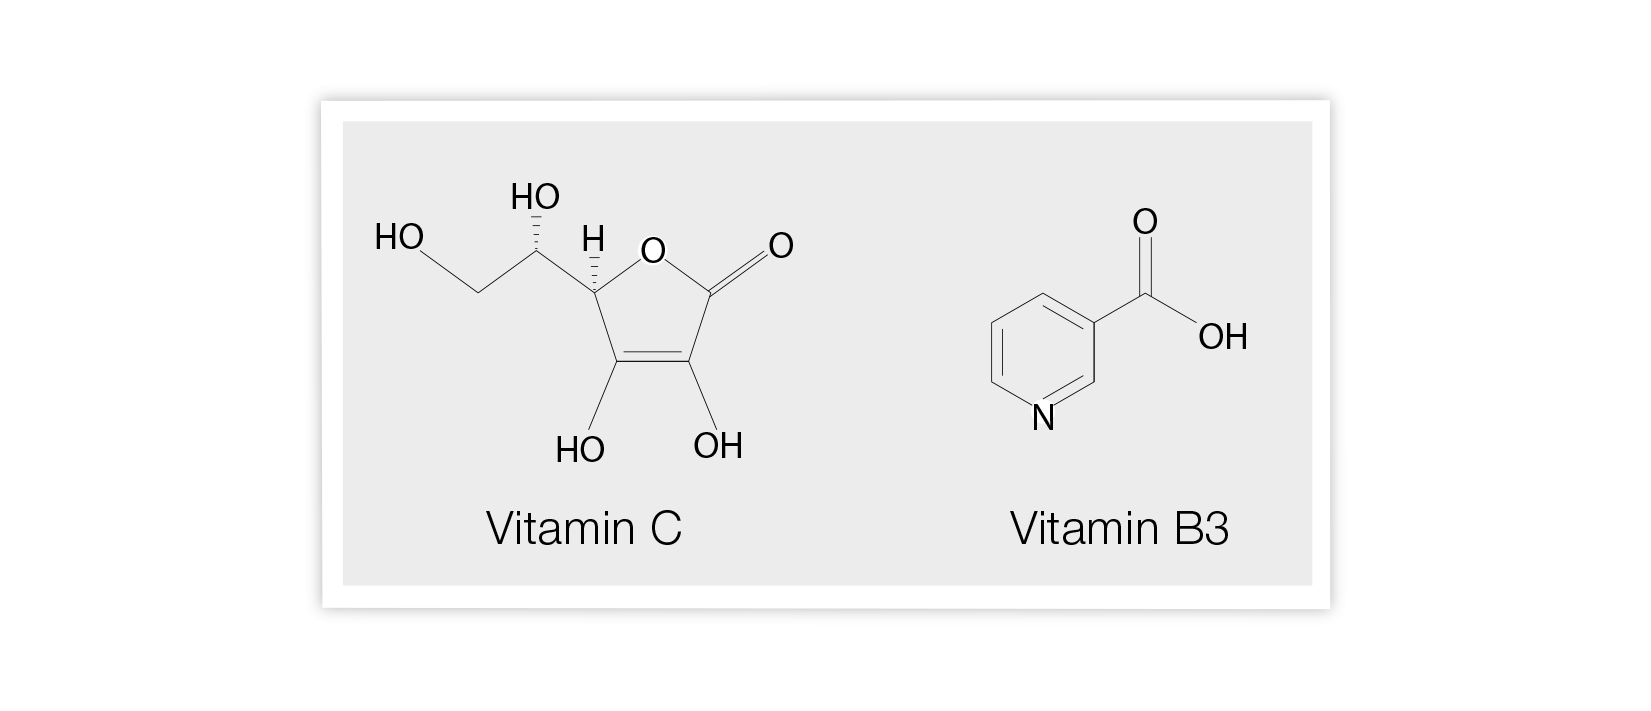 molecular structure, vitamin C, vitamin B3, chromatography